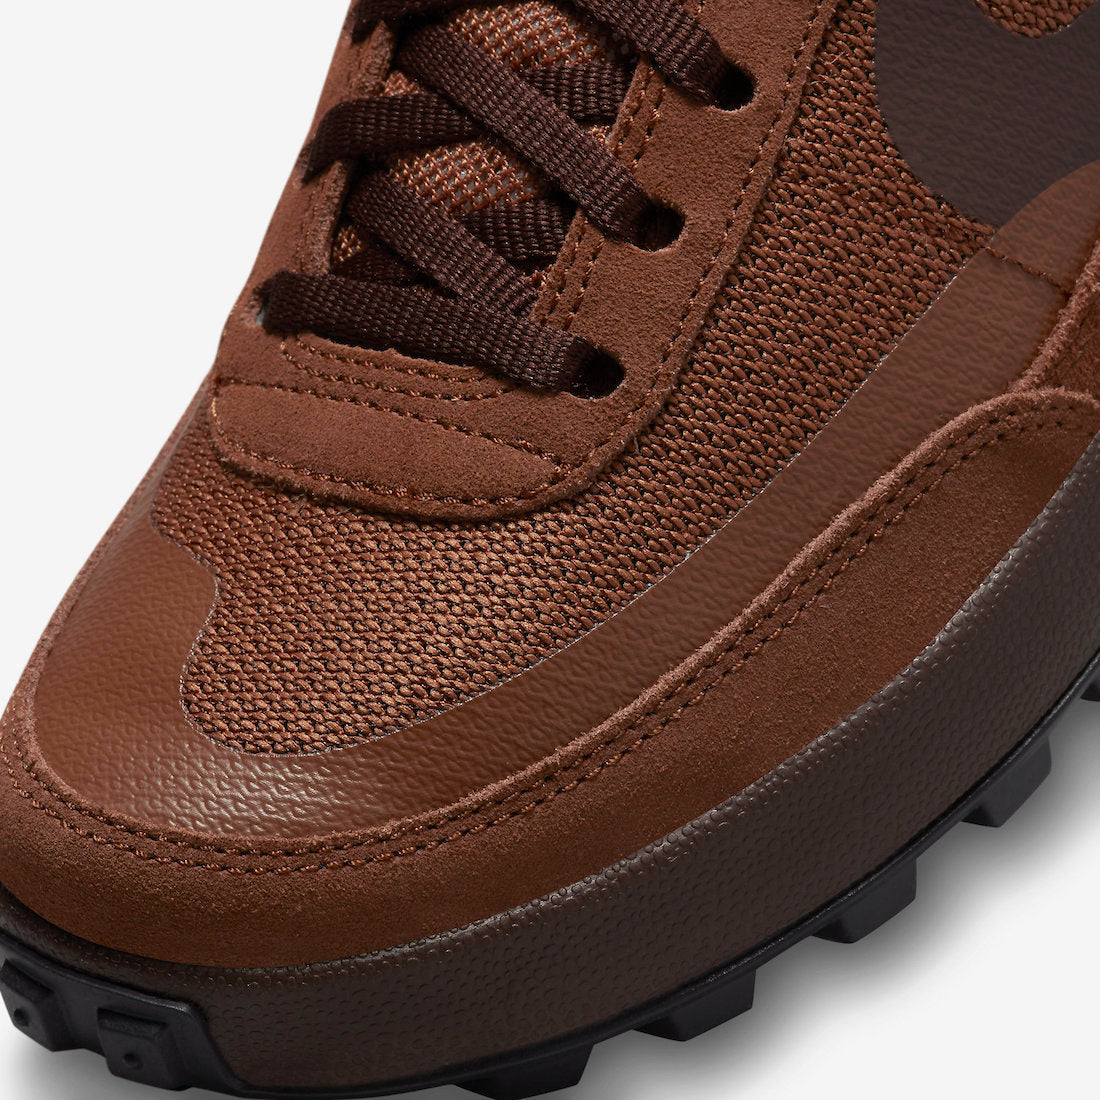 Tom Sachs x NikeCraft General Purpose Shoe “Brown”